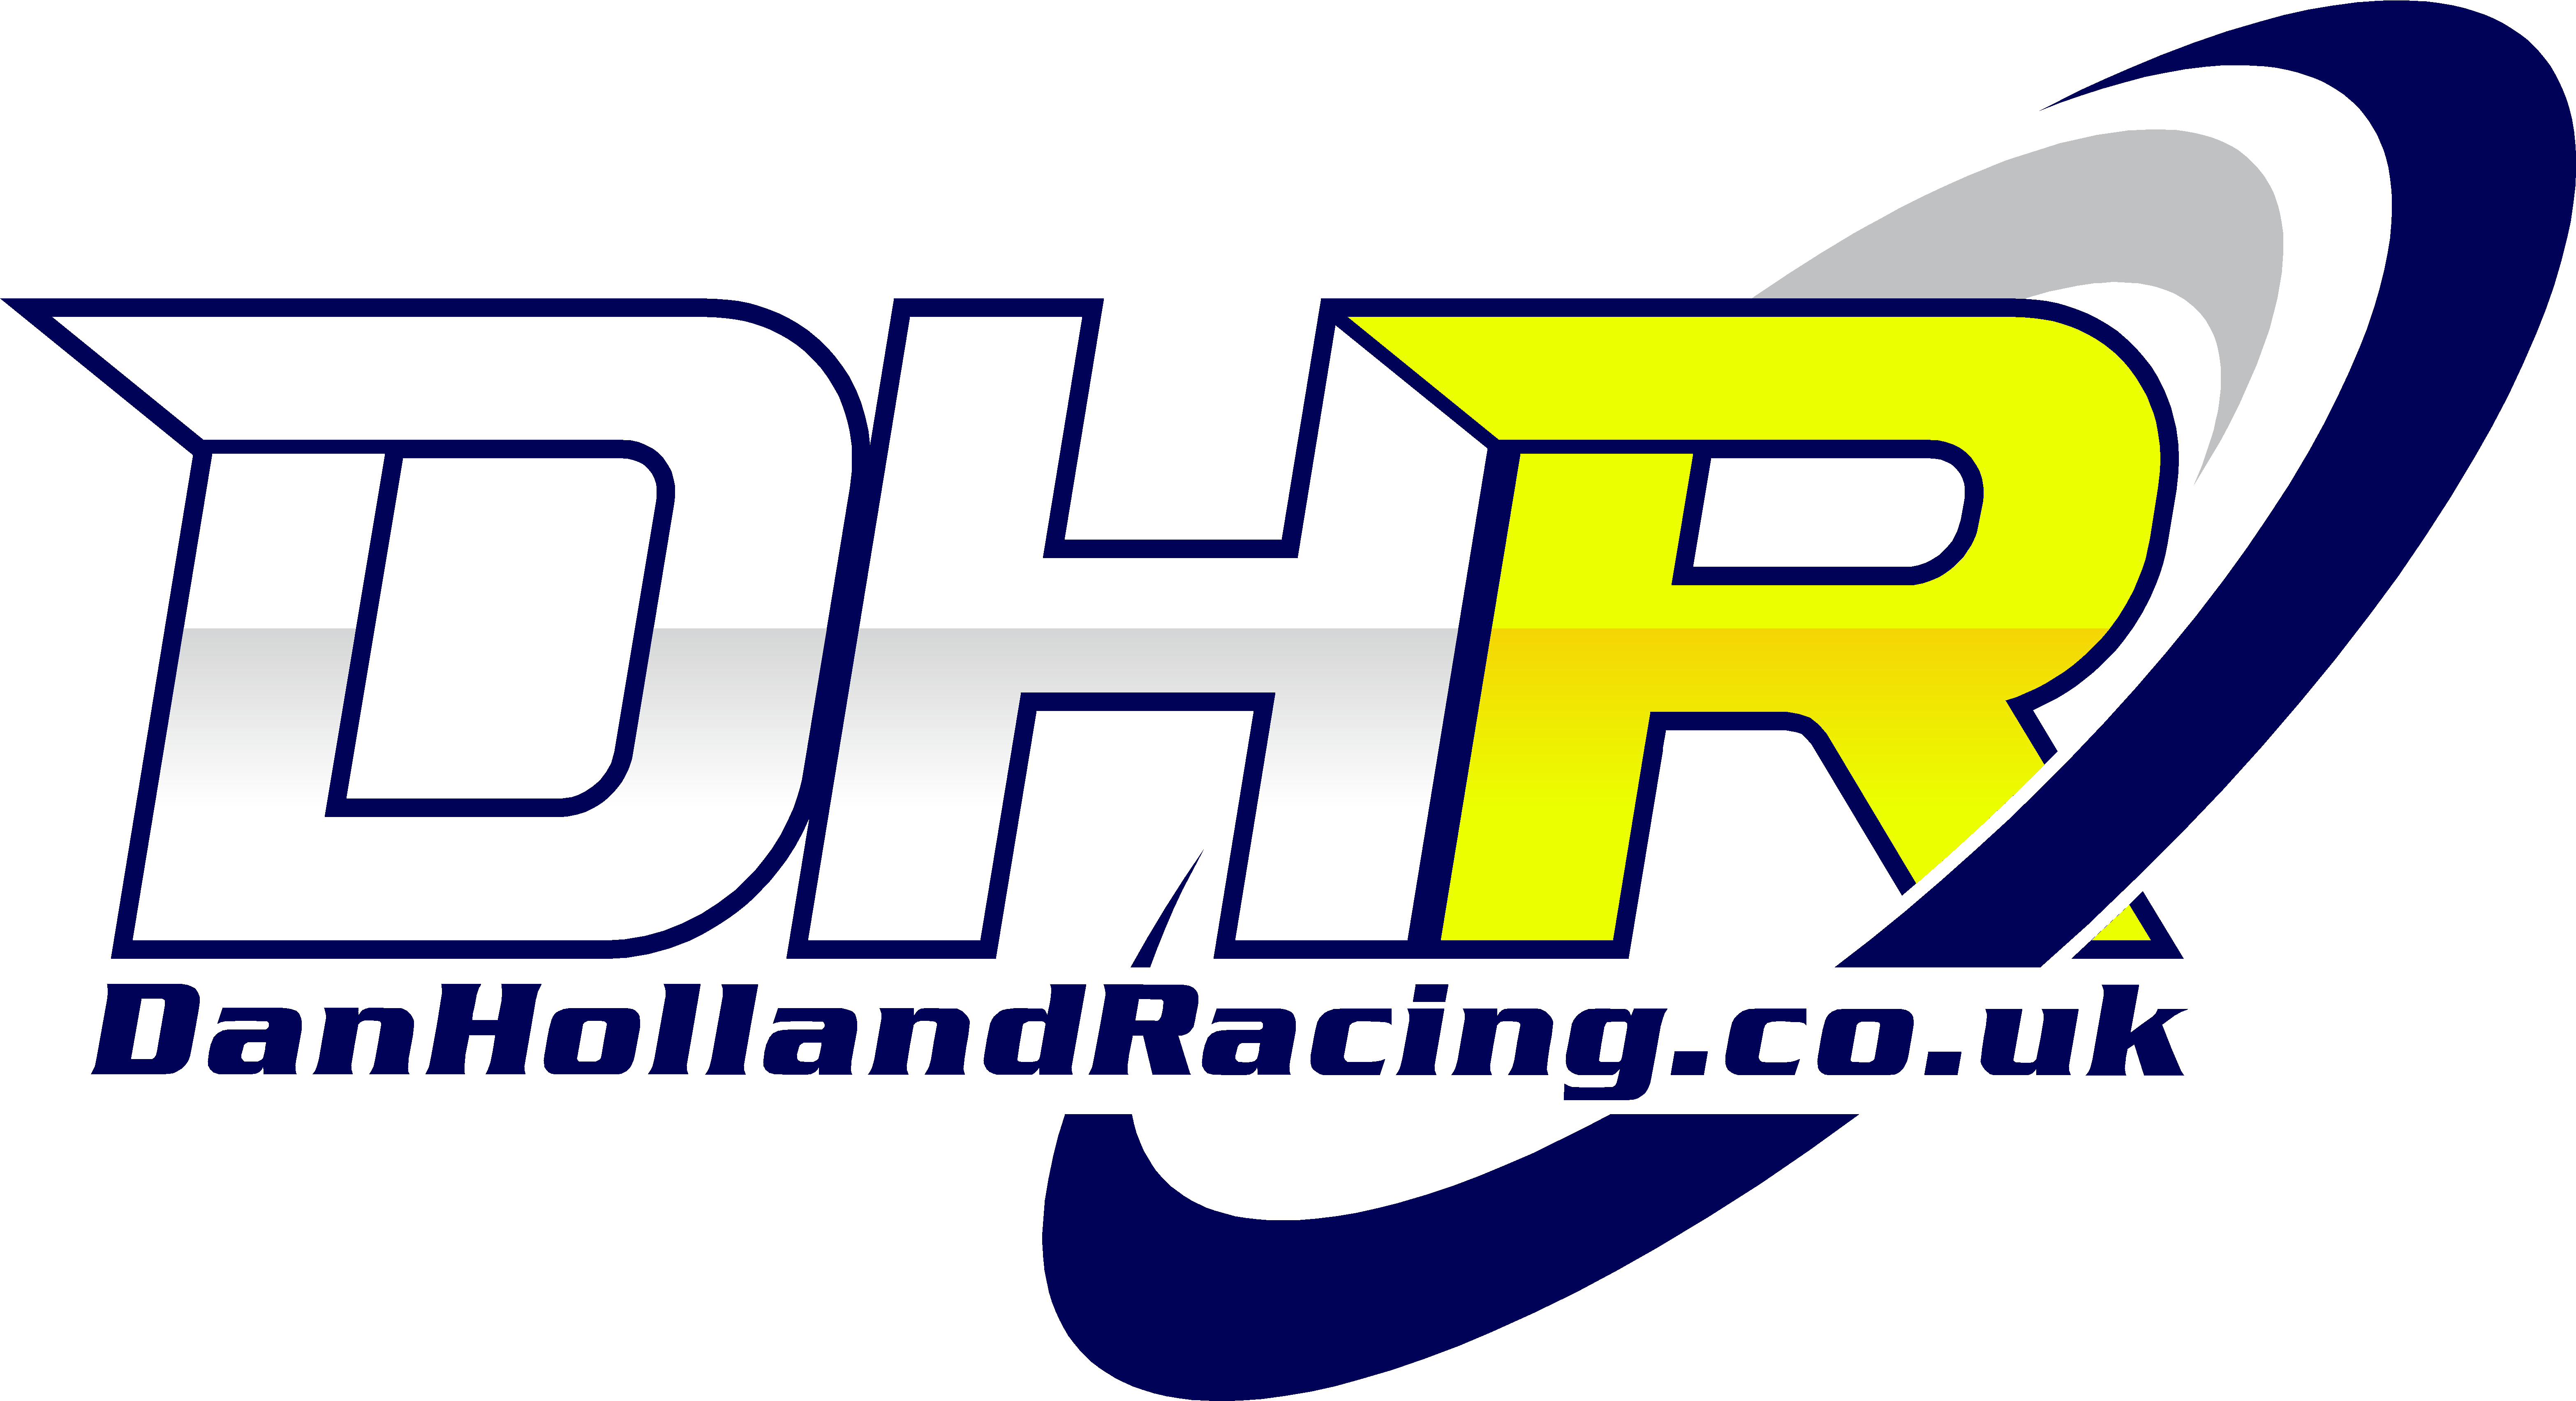 DHR Logo - Home Page | Dan Holland Racing